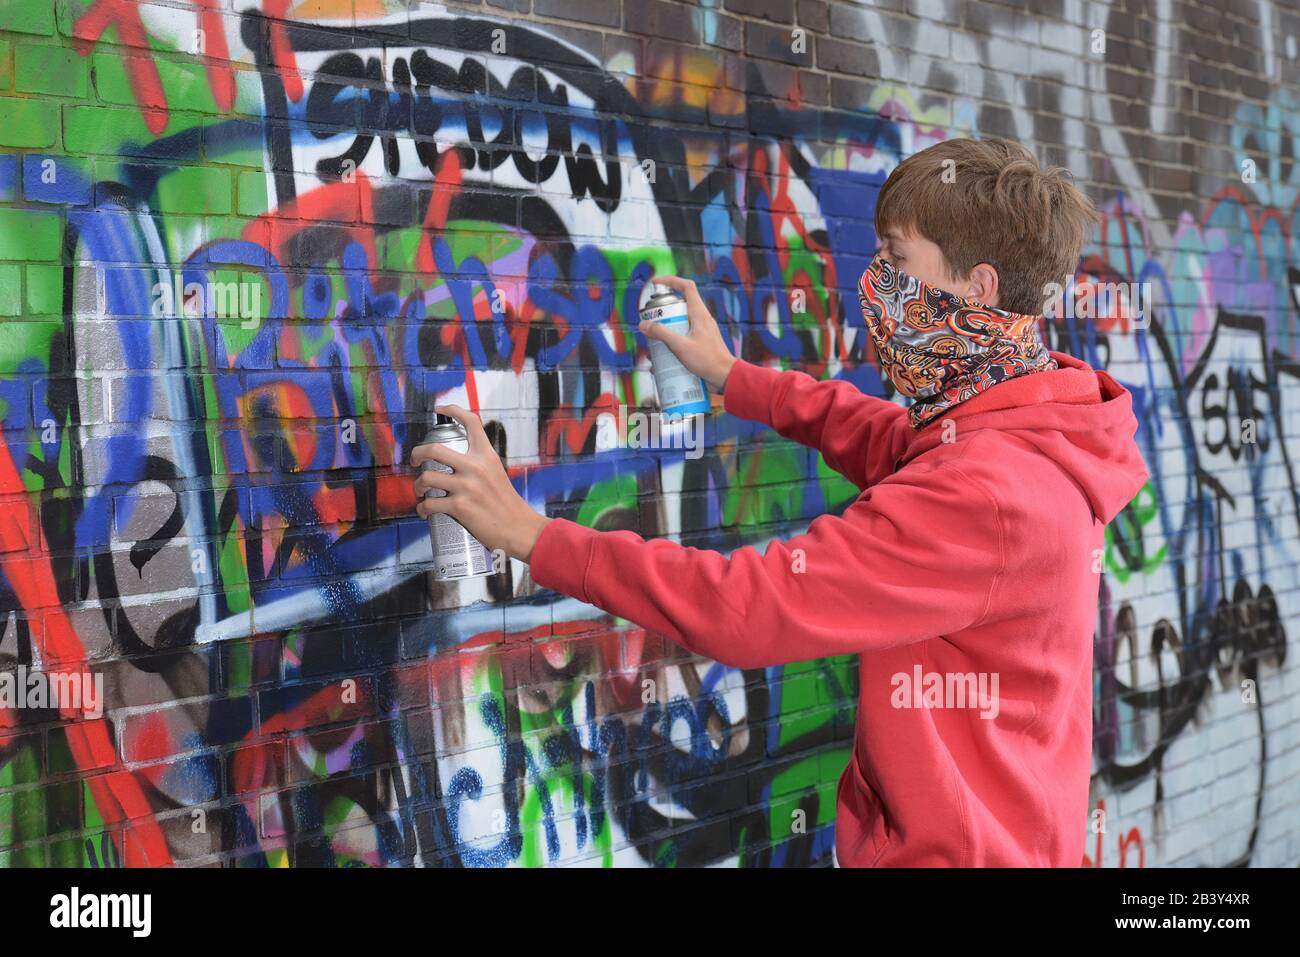 Jugendlicher, Sprayer, Graffiti Foto Stock